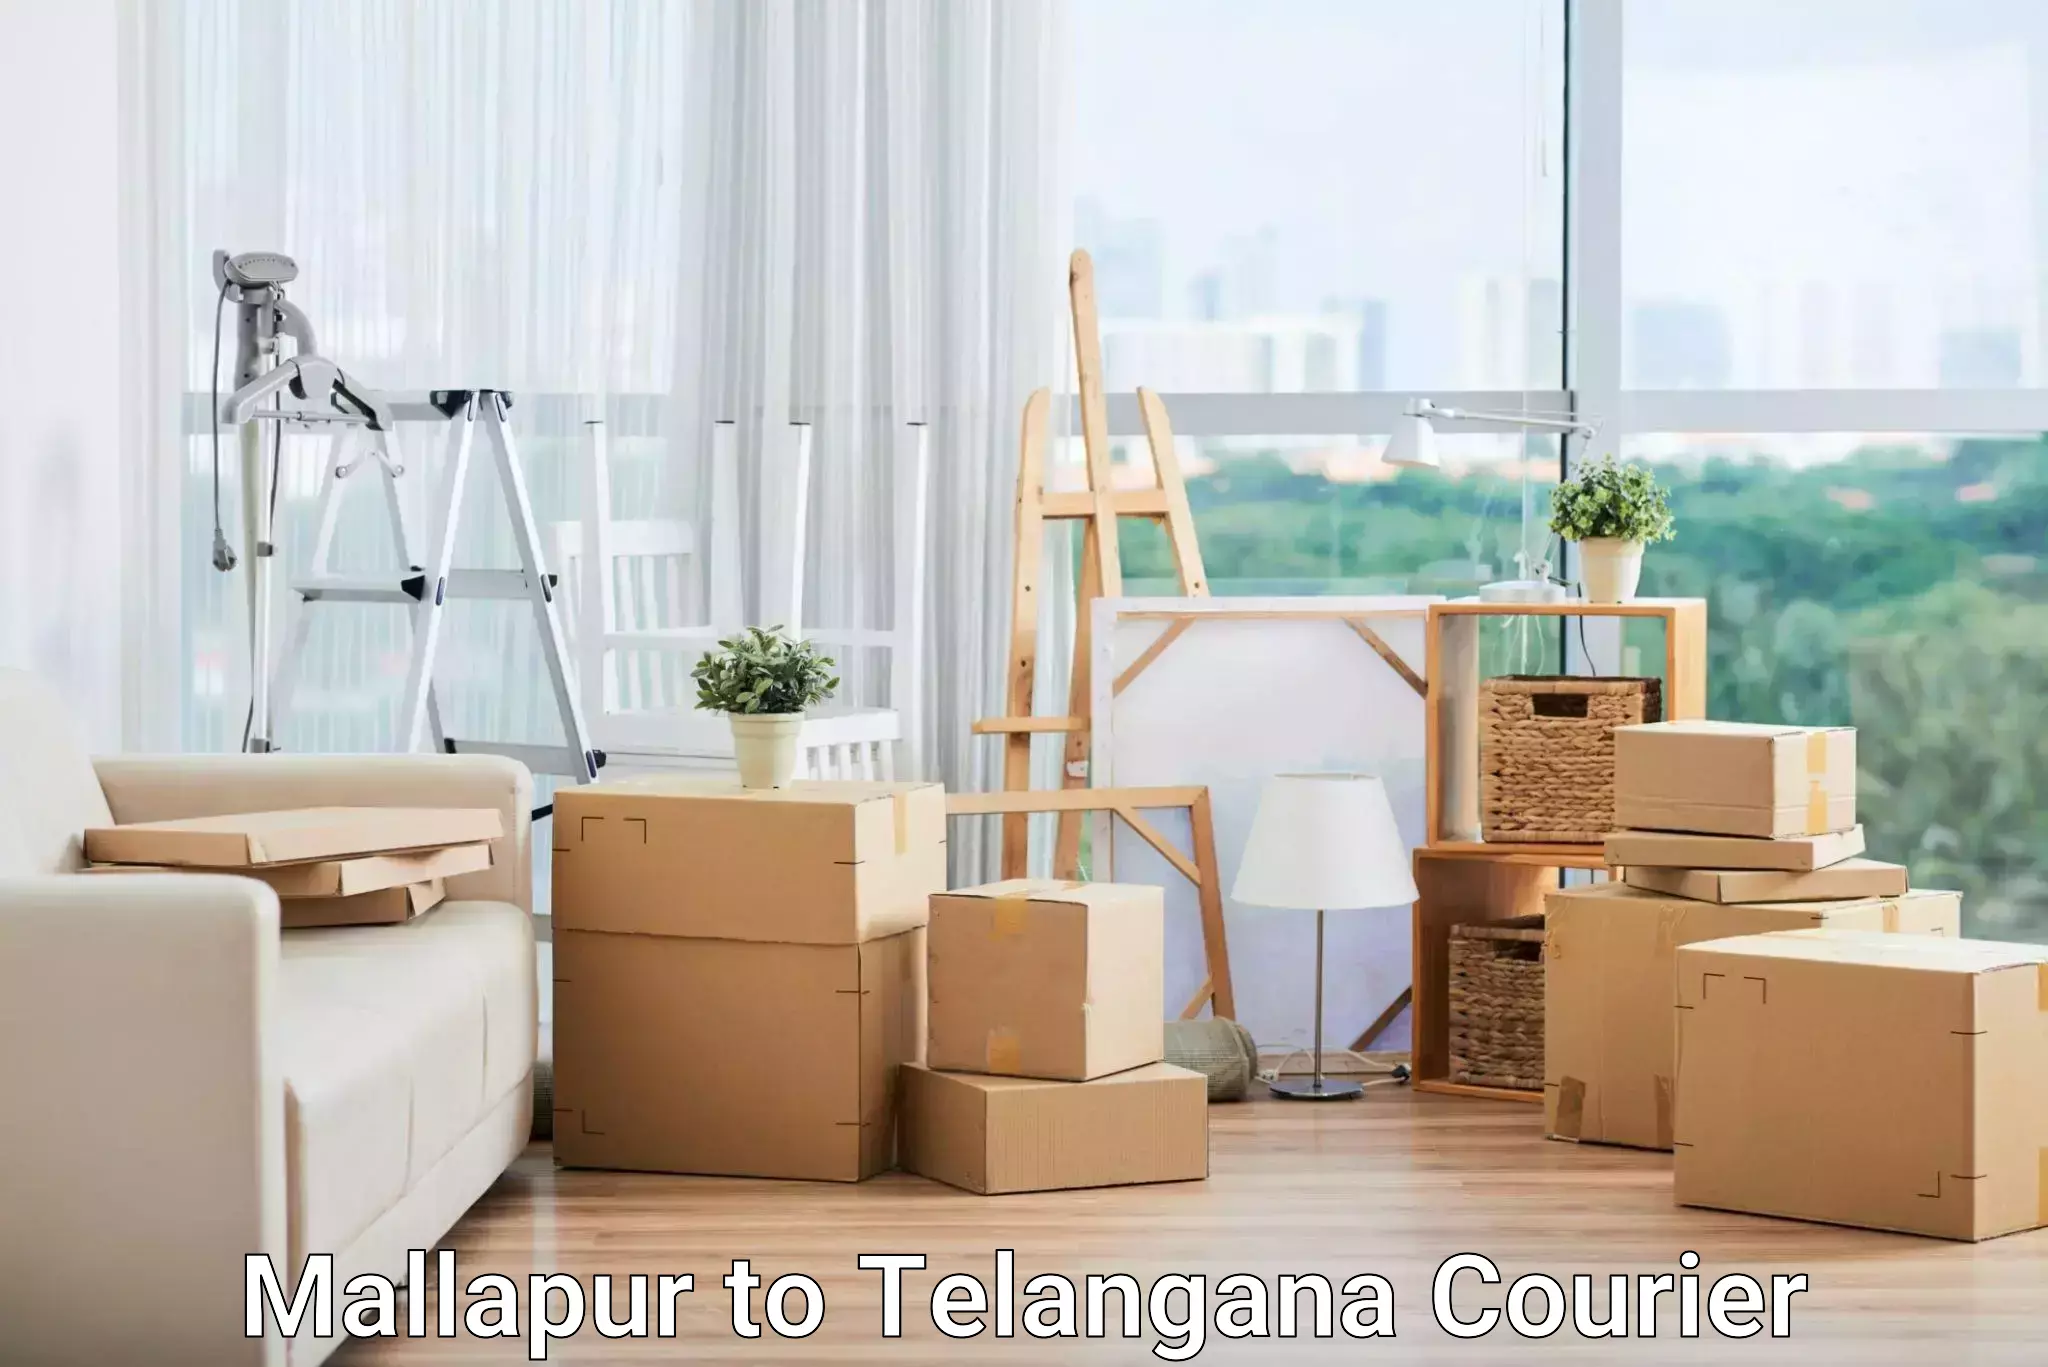 Subscription-based courier Mallapur to Cherla